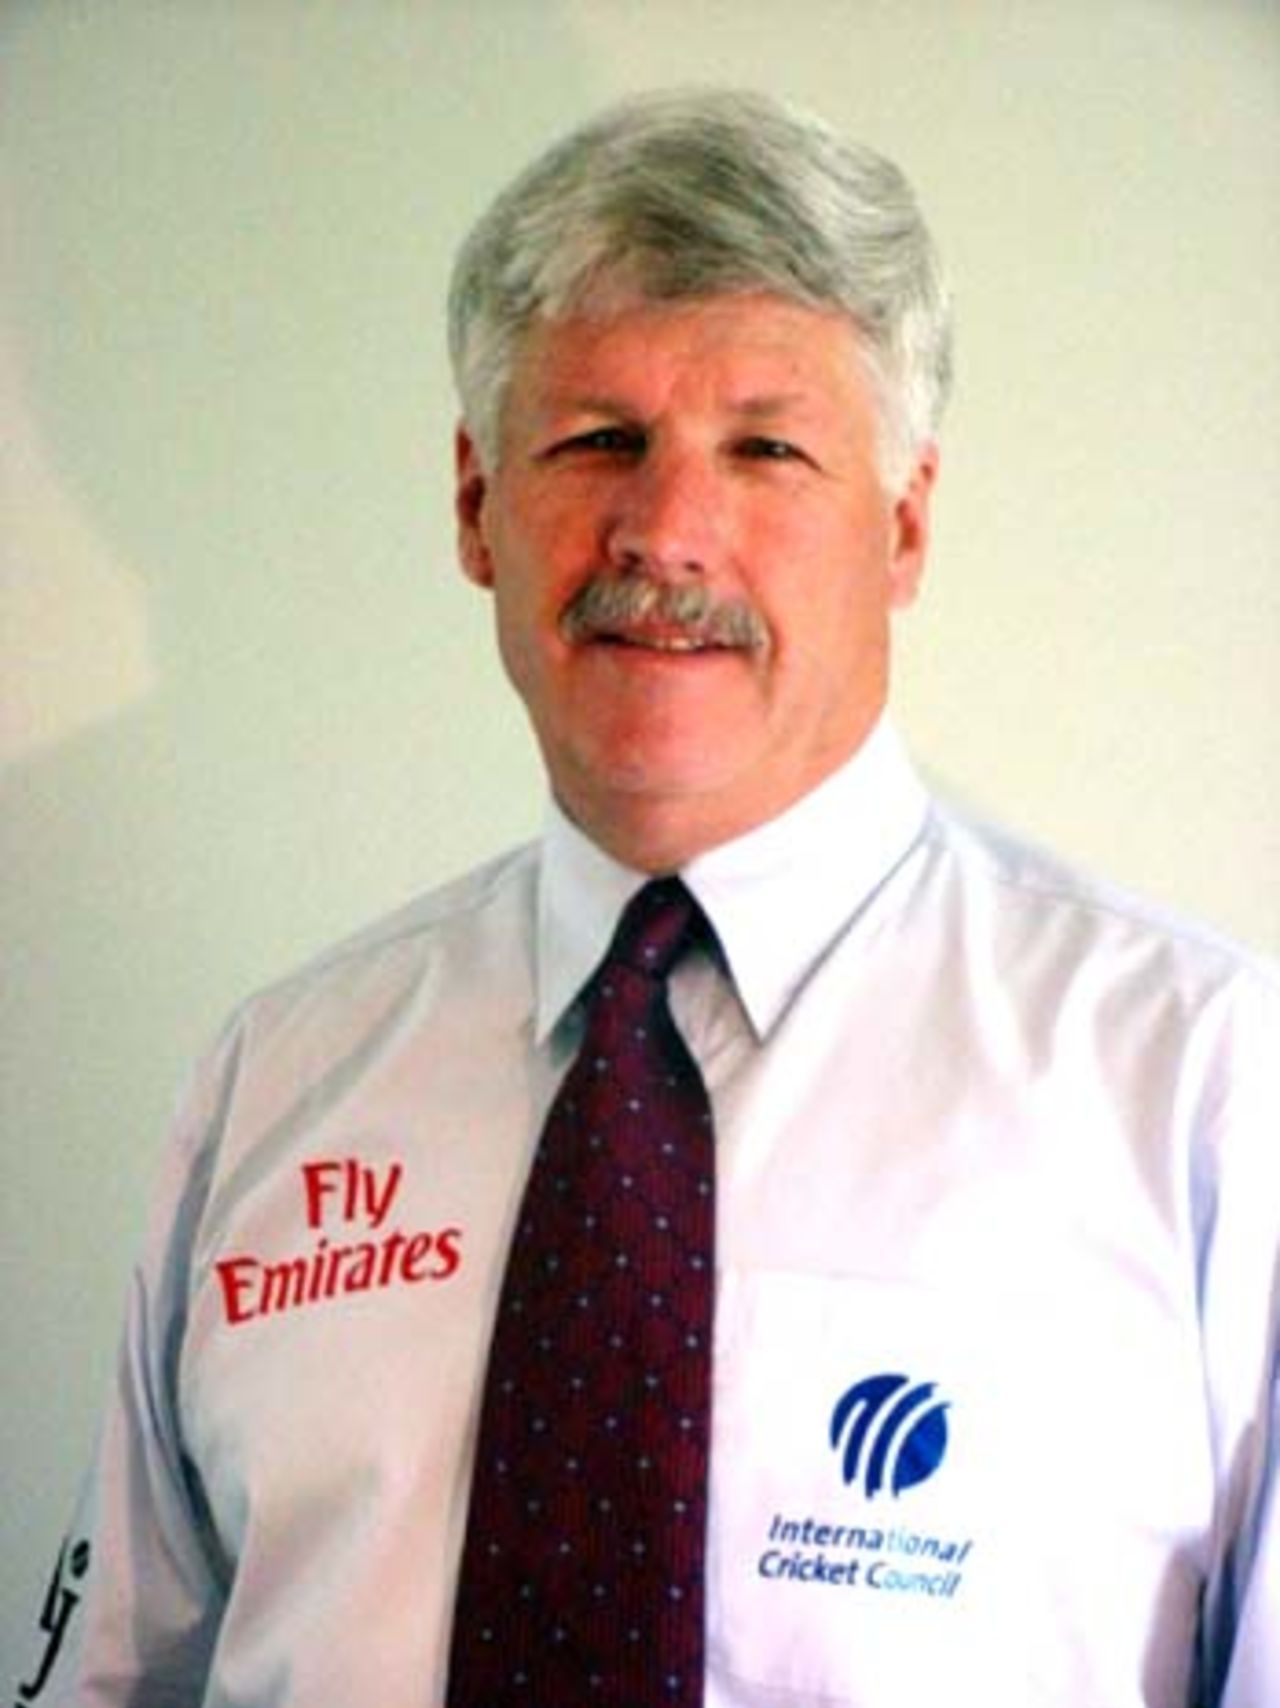 ICC Match Referee - Alan Hurst